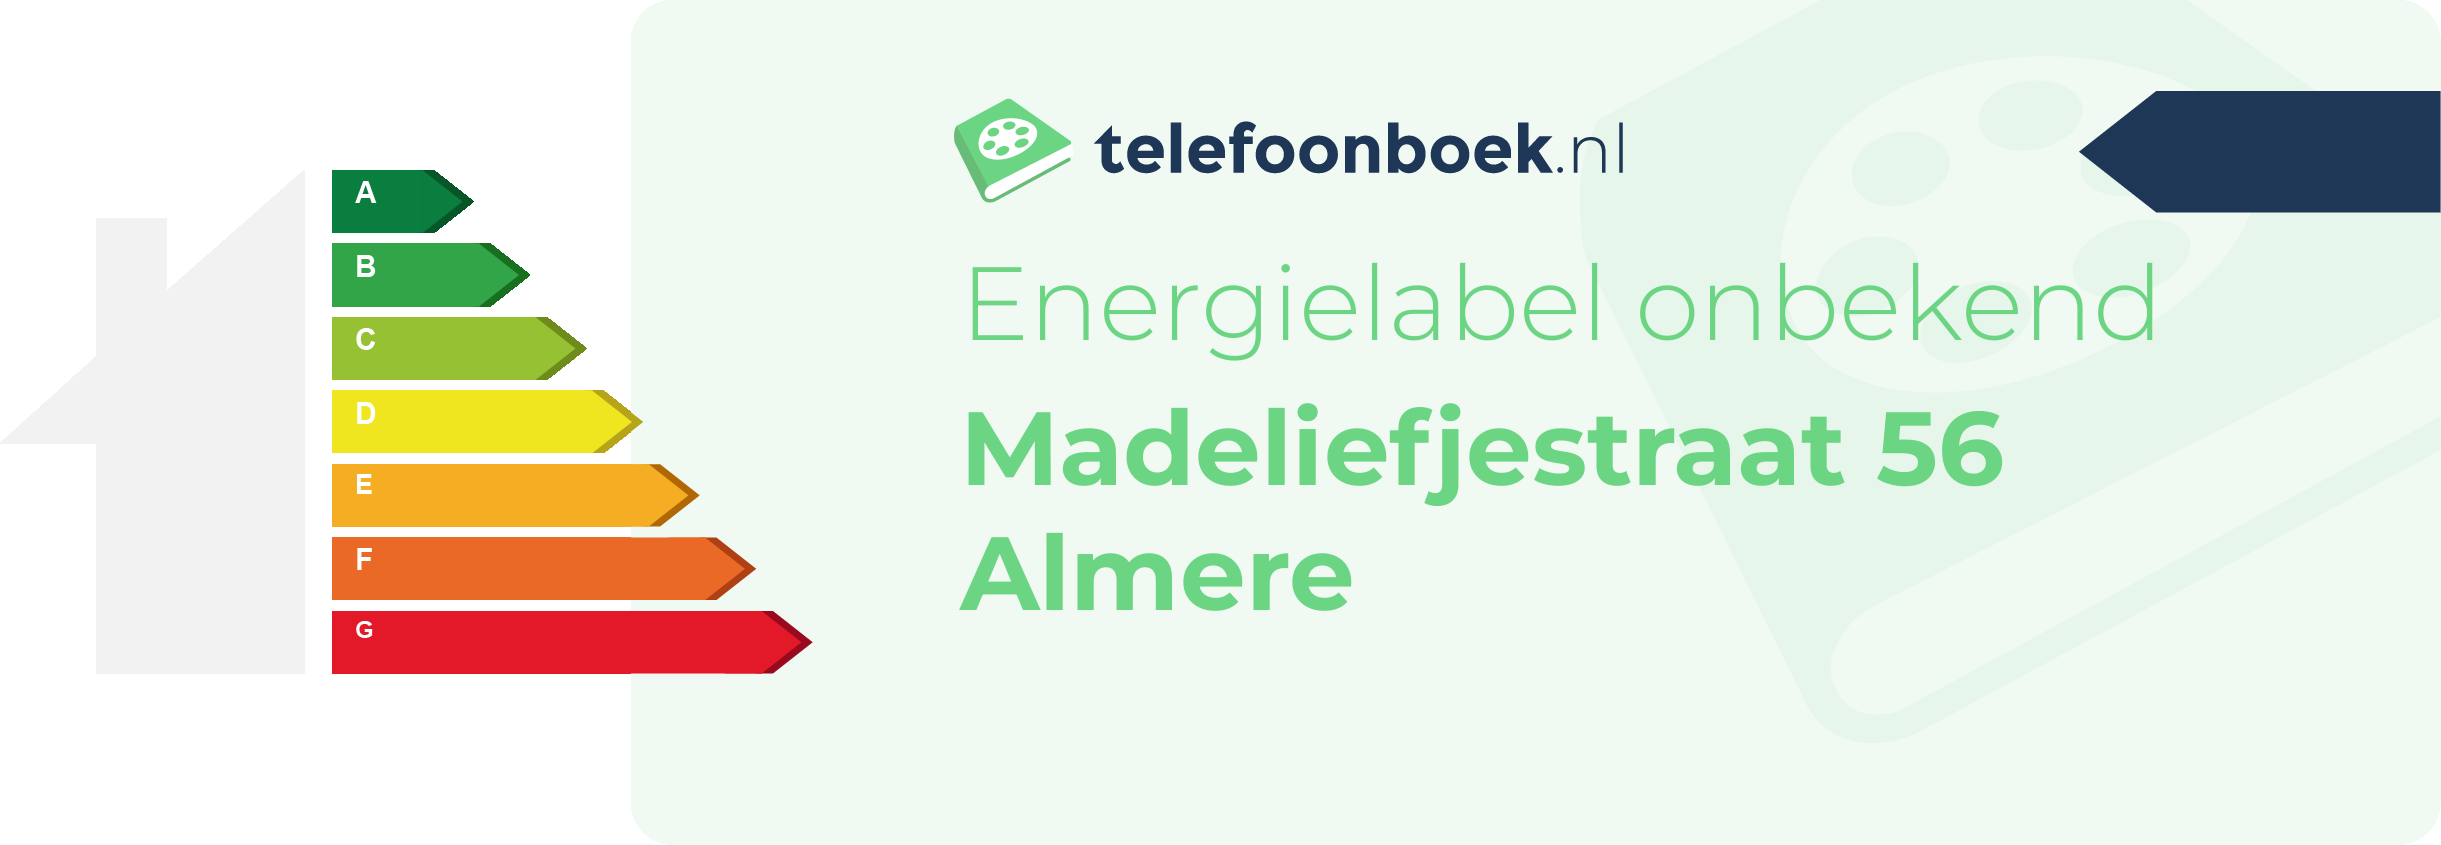 Energielabel Madeliefjestraat 56 Almere